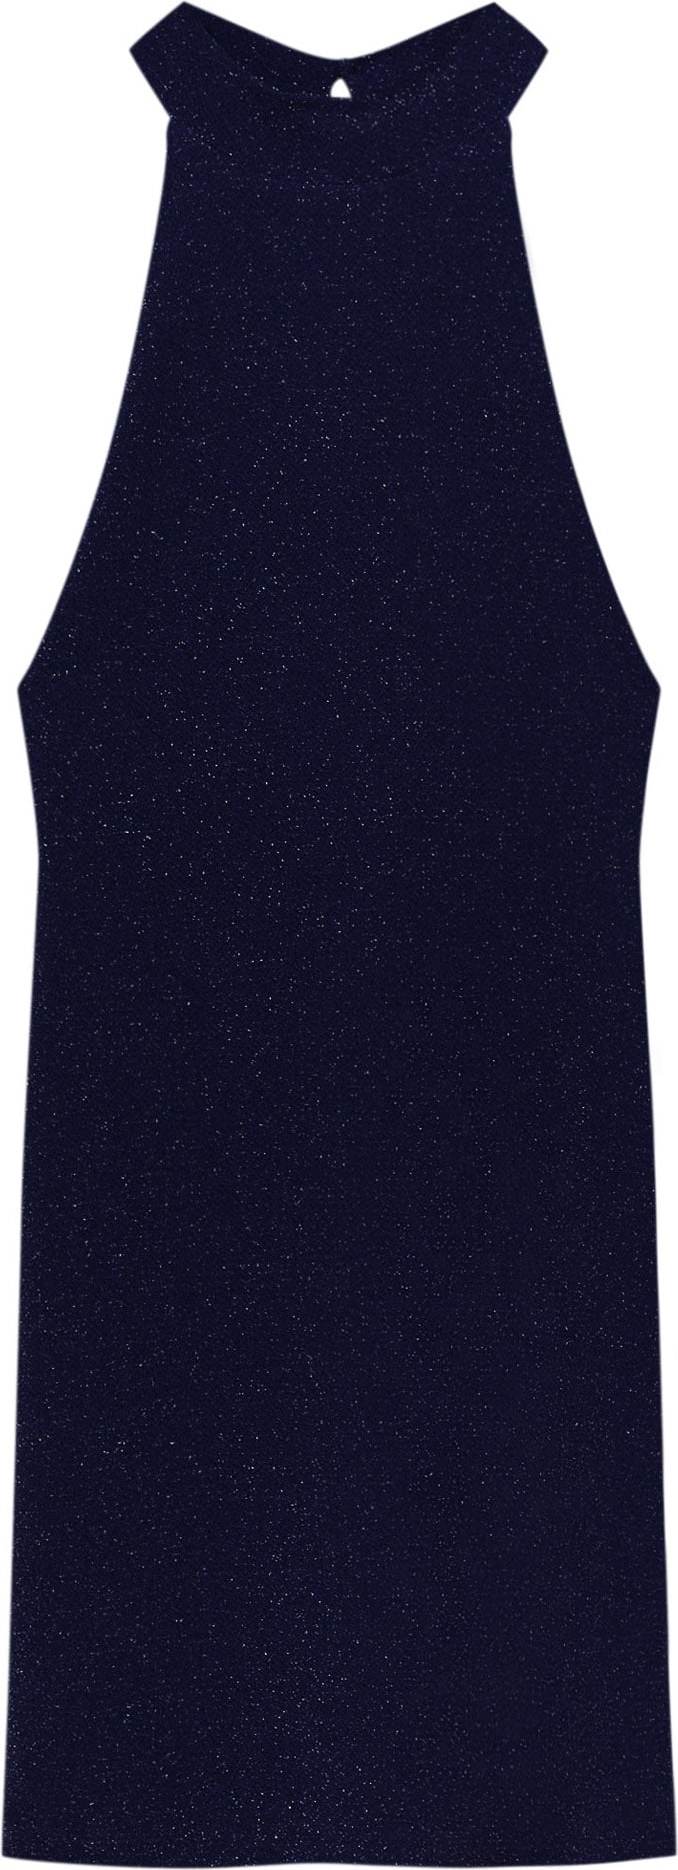 Pull&Bear Koktejlové šaty marine modrá